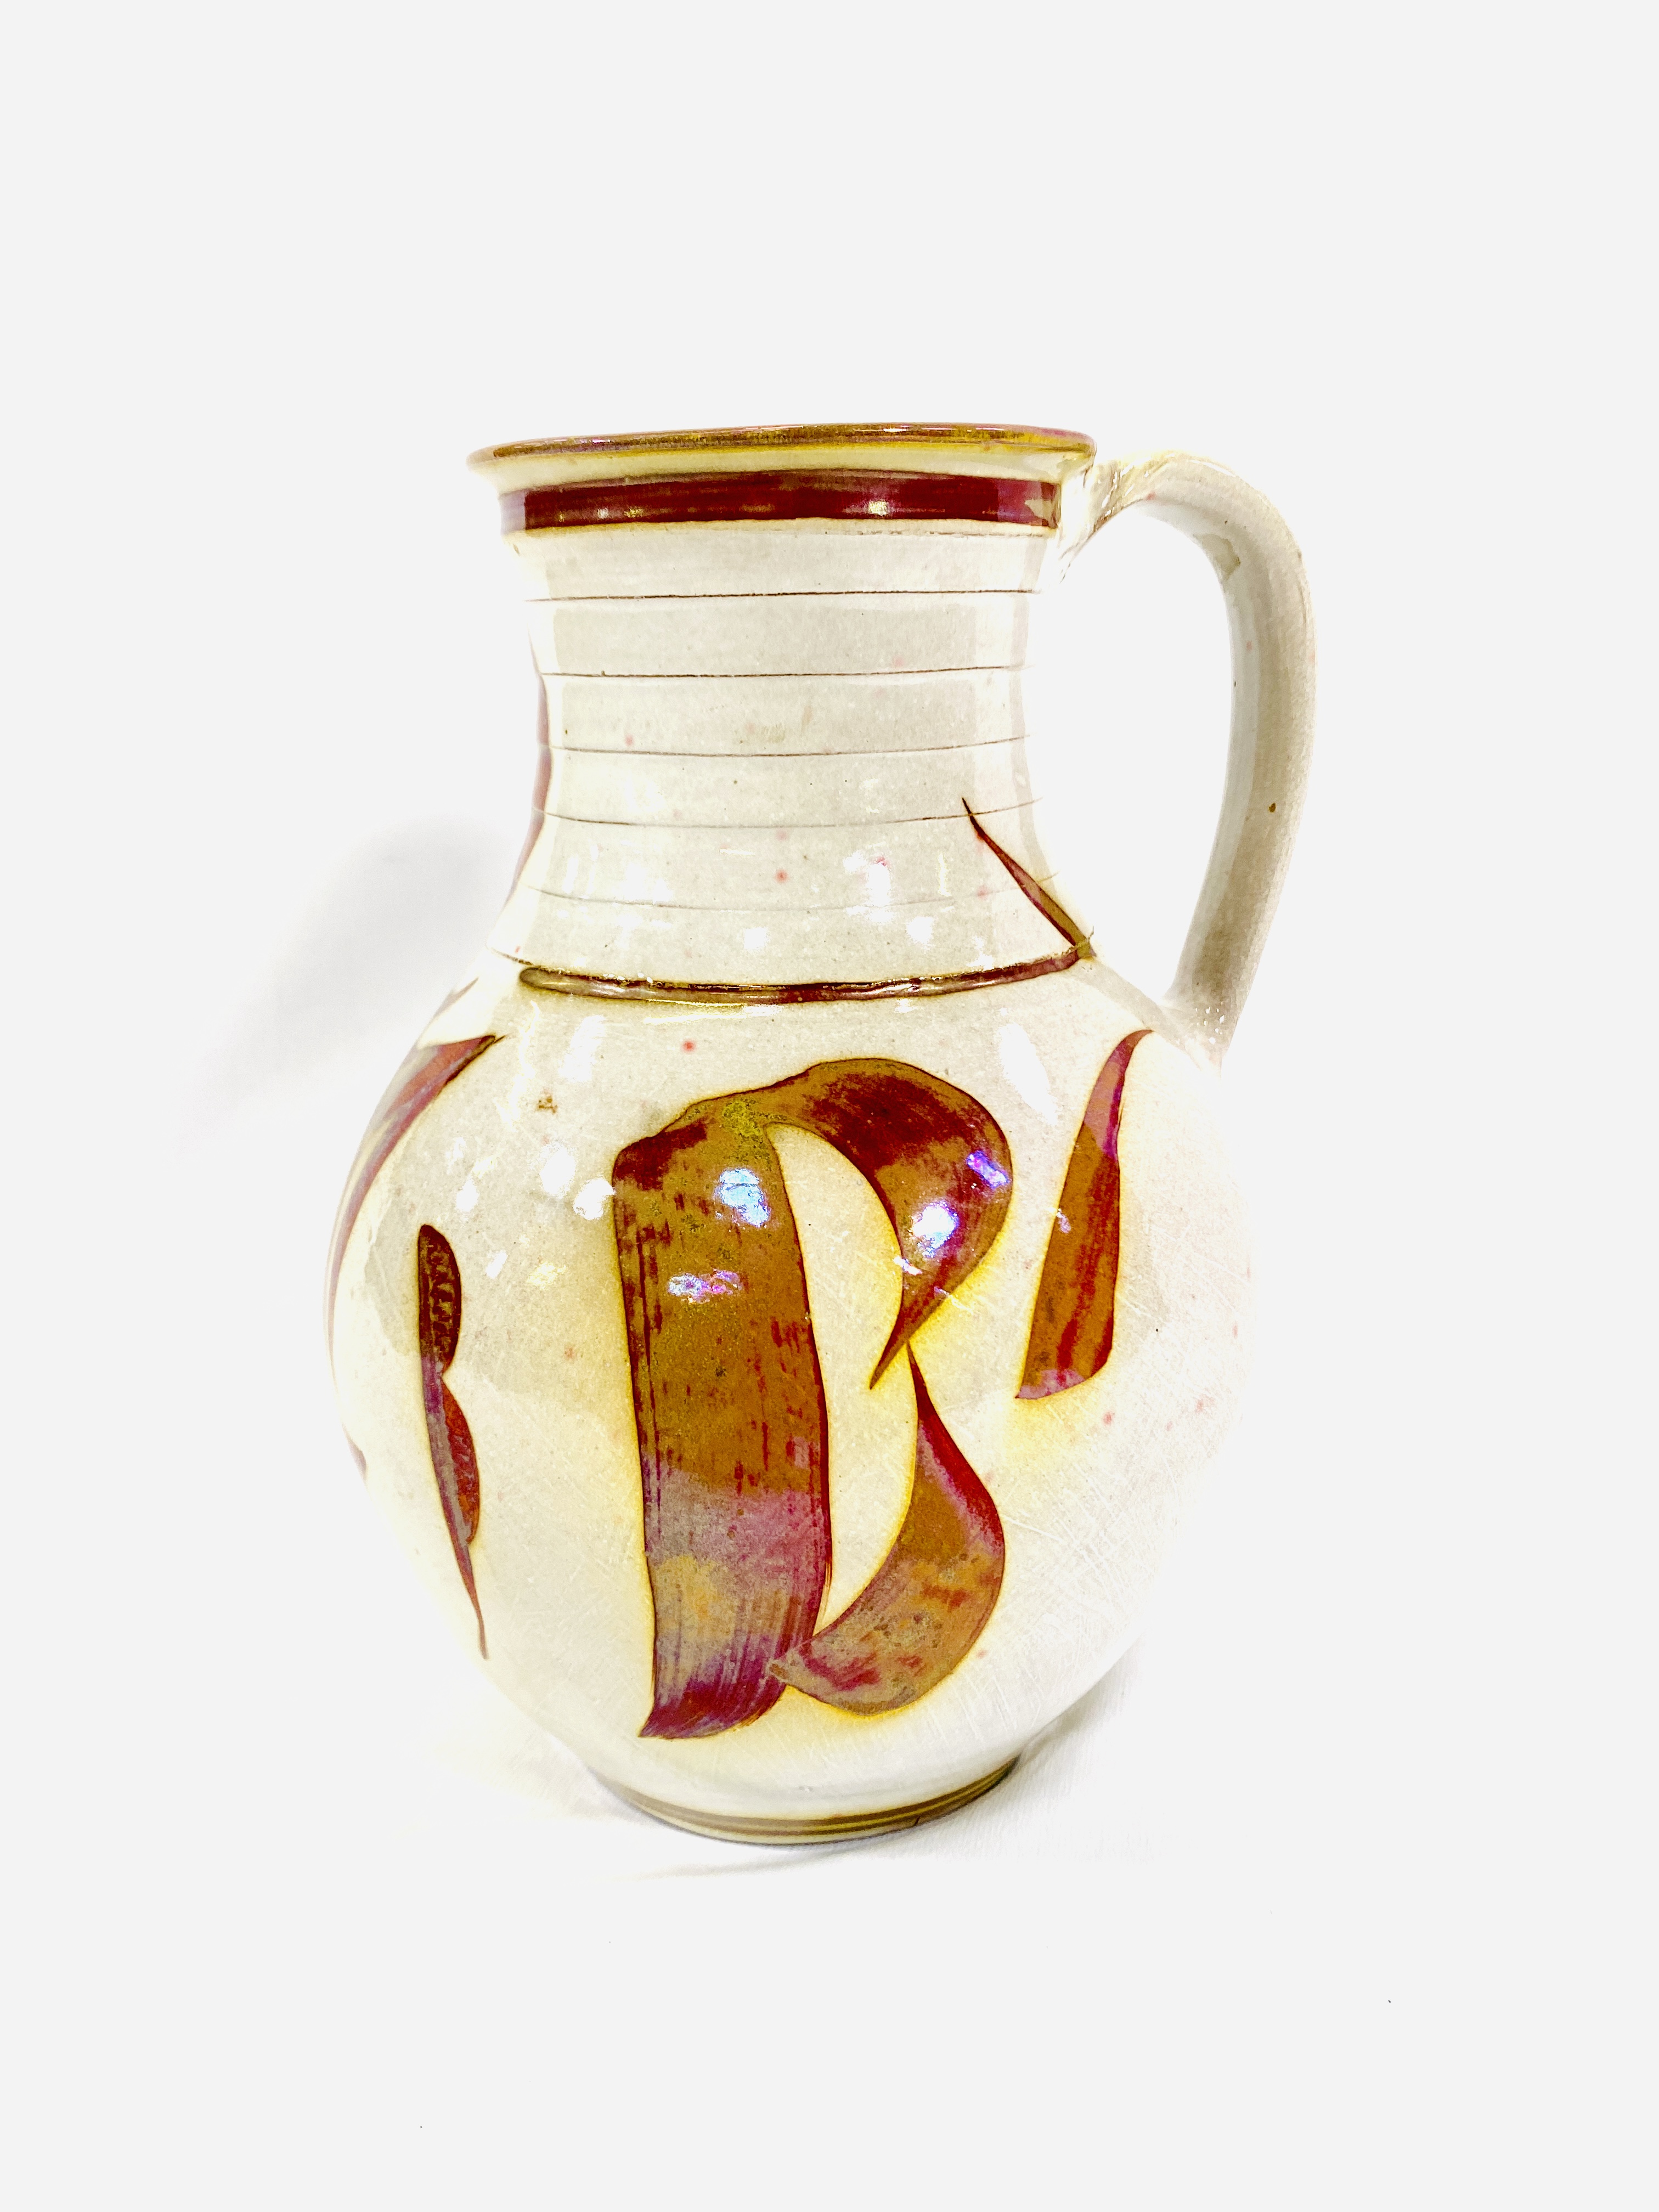 Alan Caiger-Smith - Aldermaston Pottery jug - Image 4 of 5